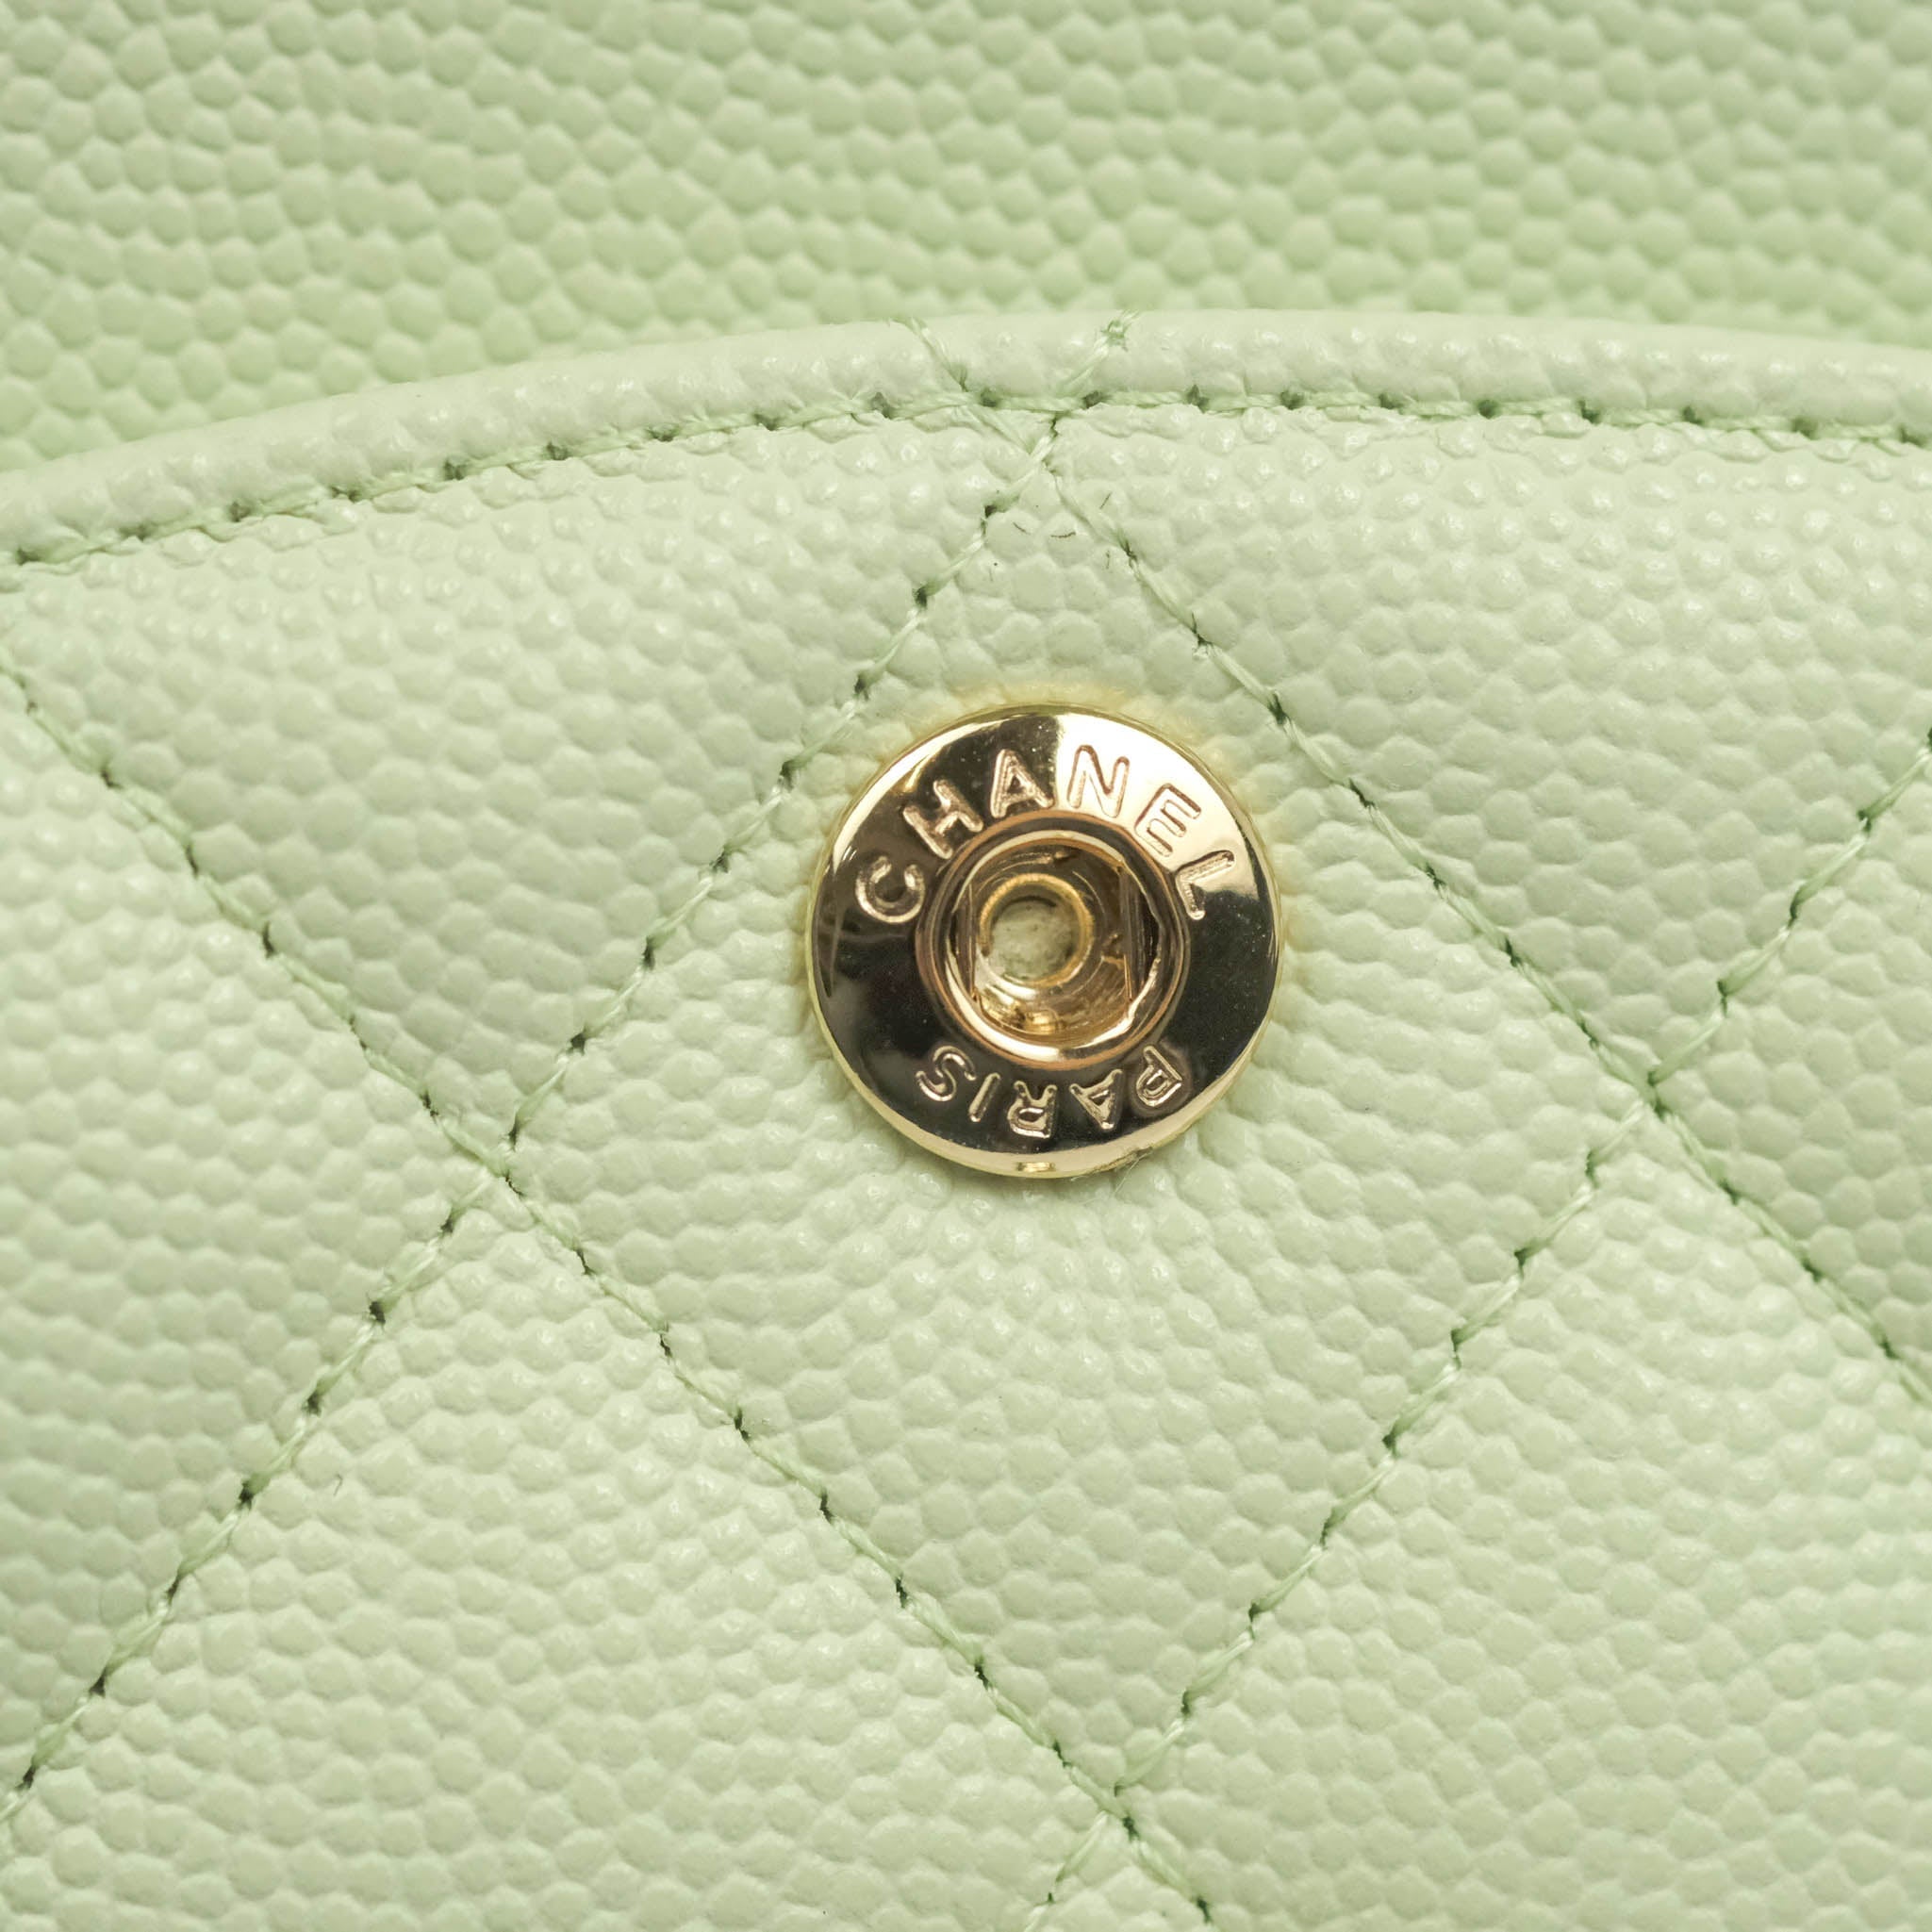 CHANEL 22C Mint Green Caviar Small Classic Flap LGHW *New - Timeless  Luxuries